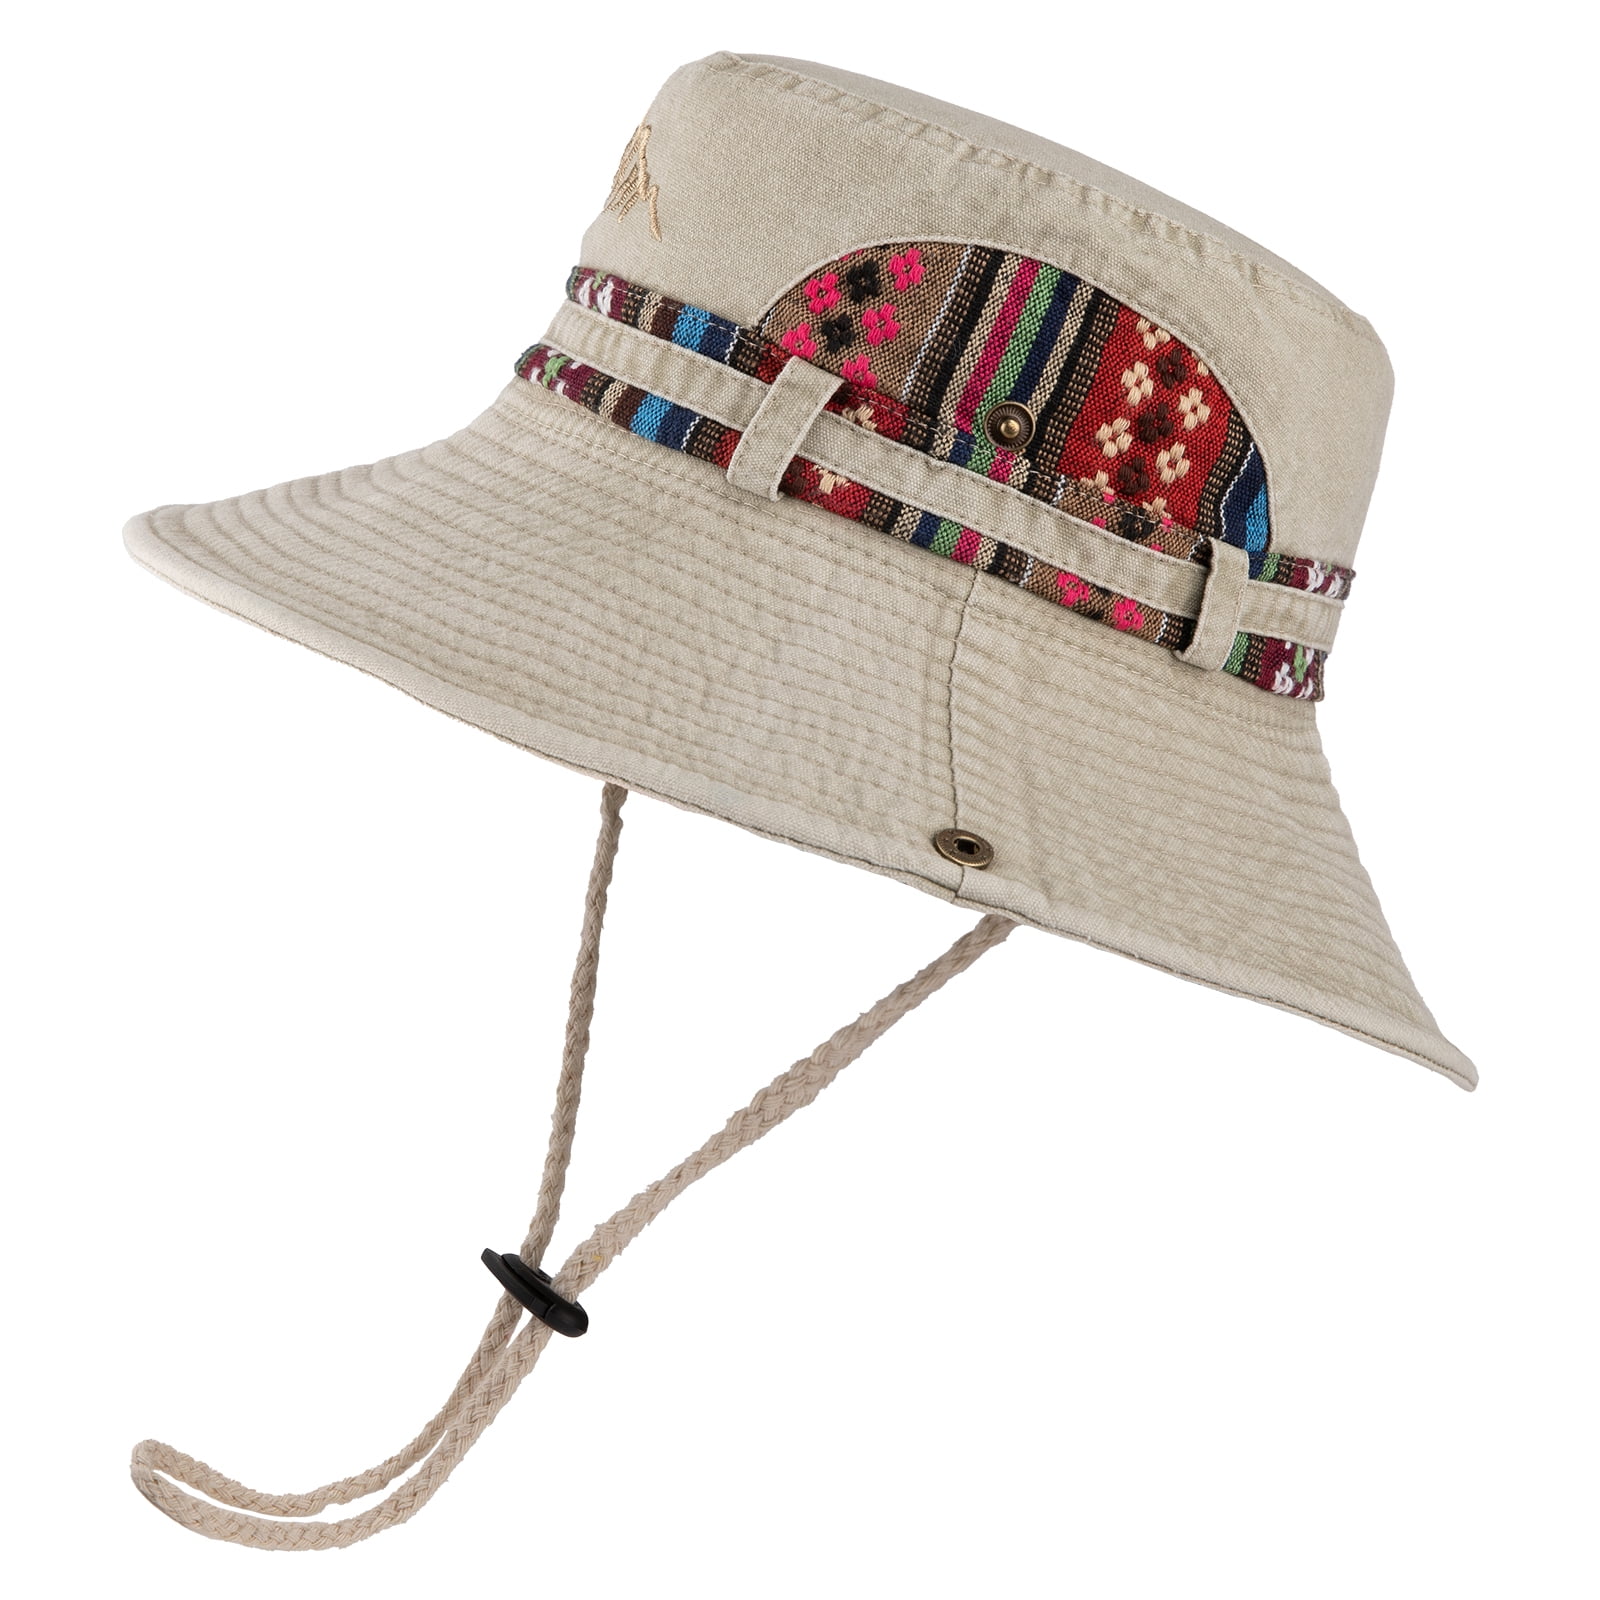 WILLBEST Cowboy Hats for Women Brown Xl Bucket Hats Star Print Fisherman  Hat Wear Cap Unisex Outdoor Party for Women 